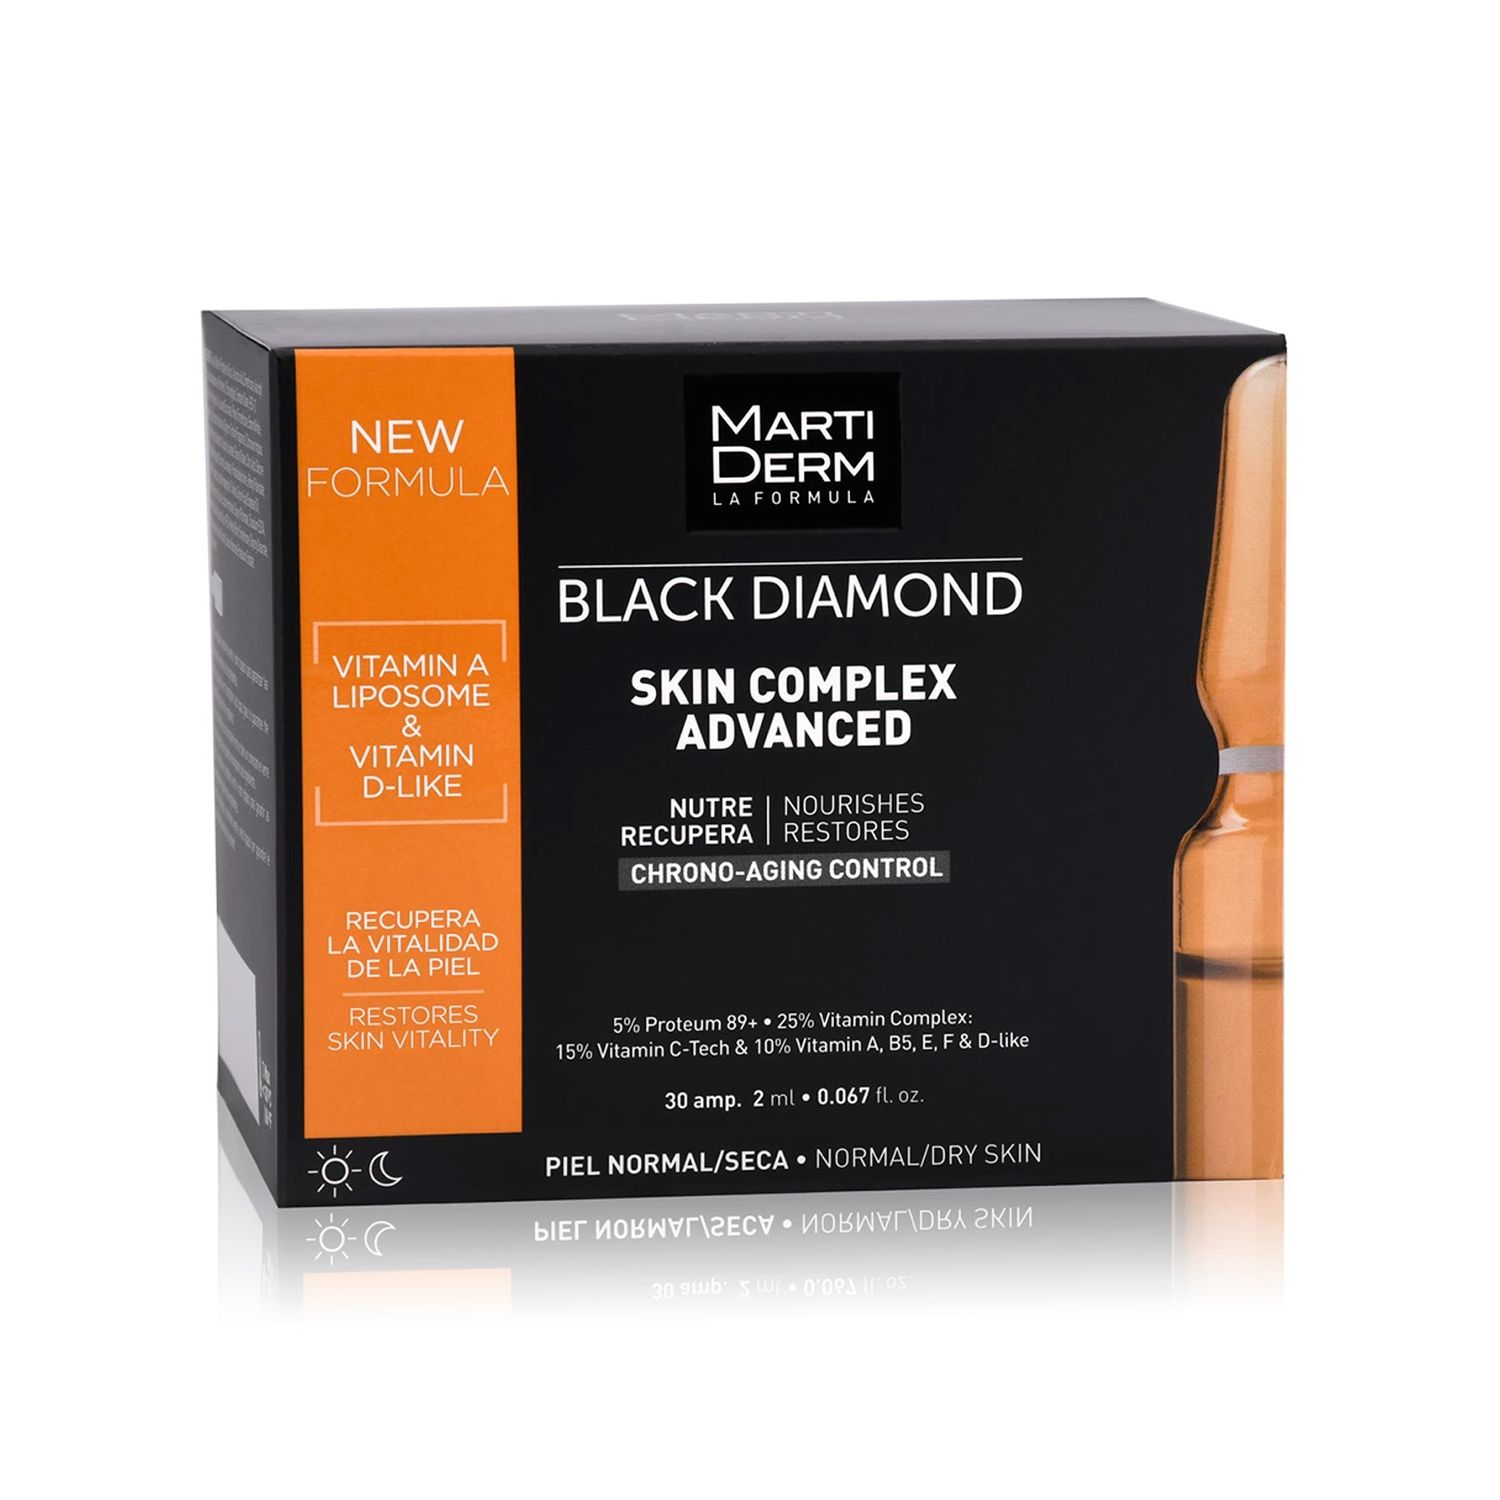  Ampoule Chống Oxy Hoá, Trẻ Hóa & Làm Sáng Da 5% Proteum 89+, 15% Vitamin C-Tech - MartiDerm Black Diamond Skin Complex Advanced 